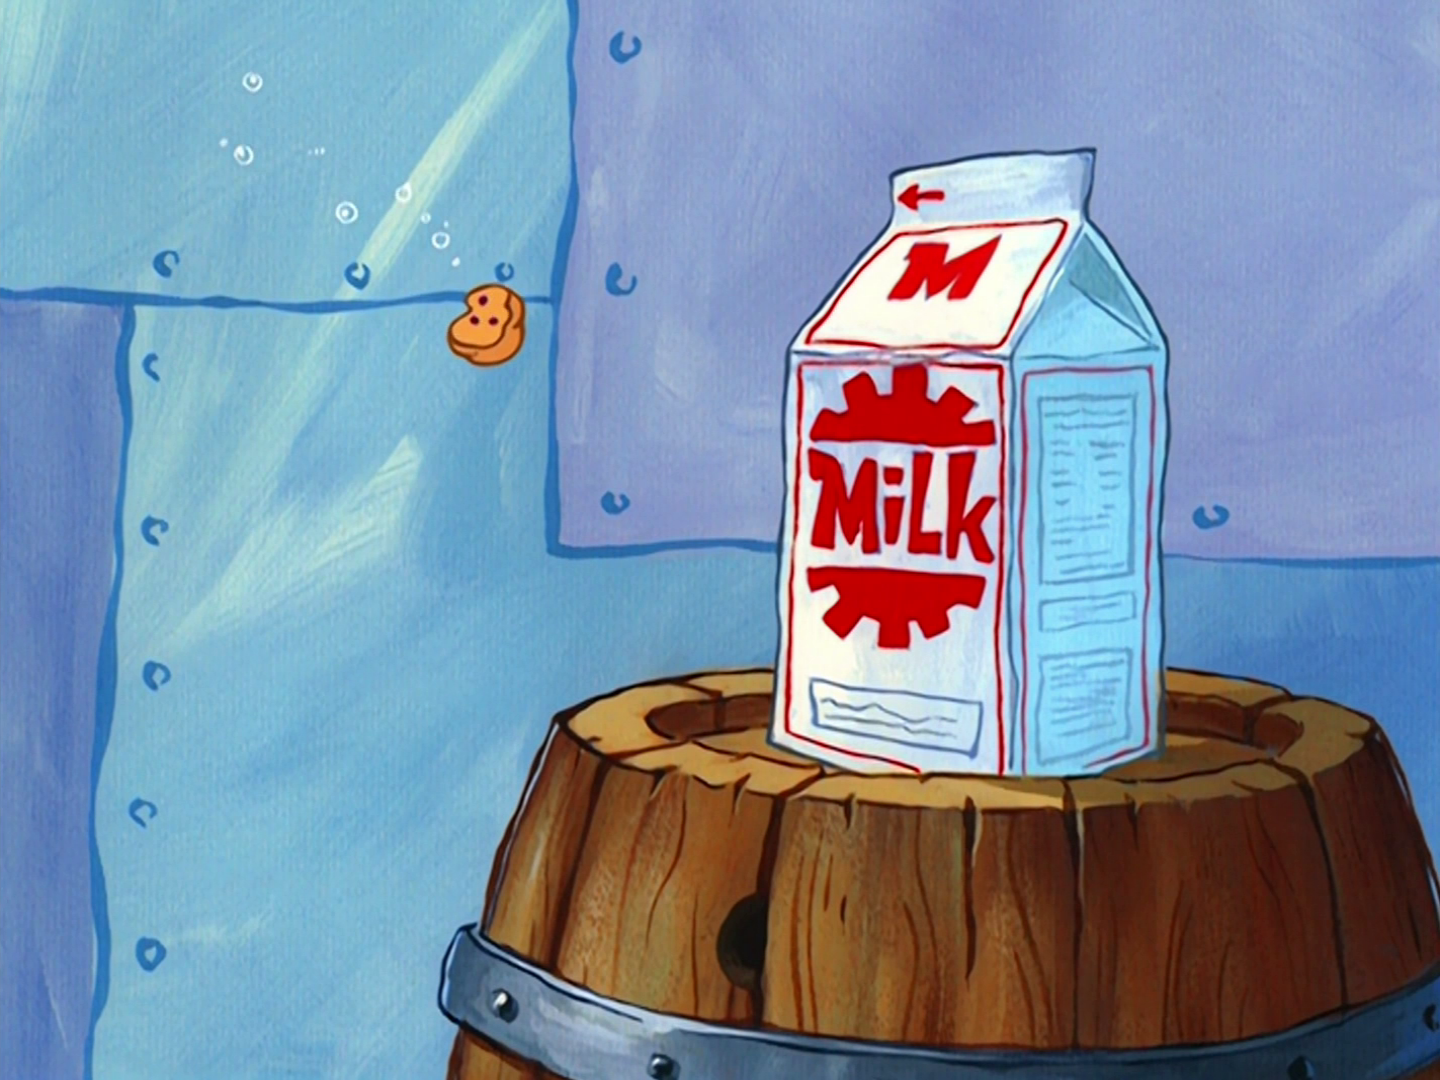 Square milk jug - Wikipedia